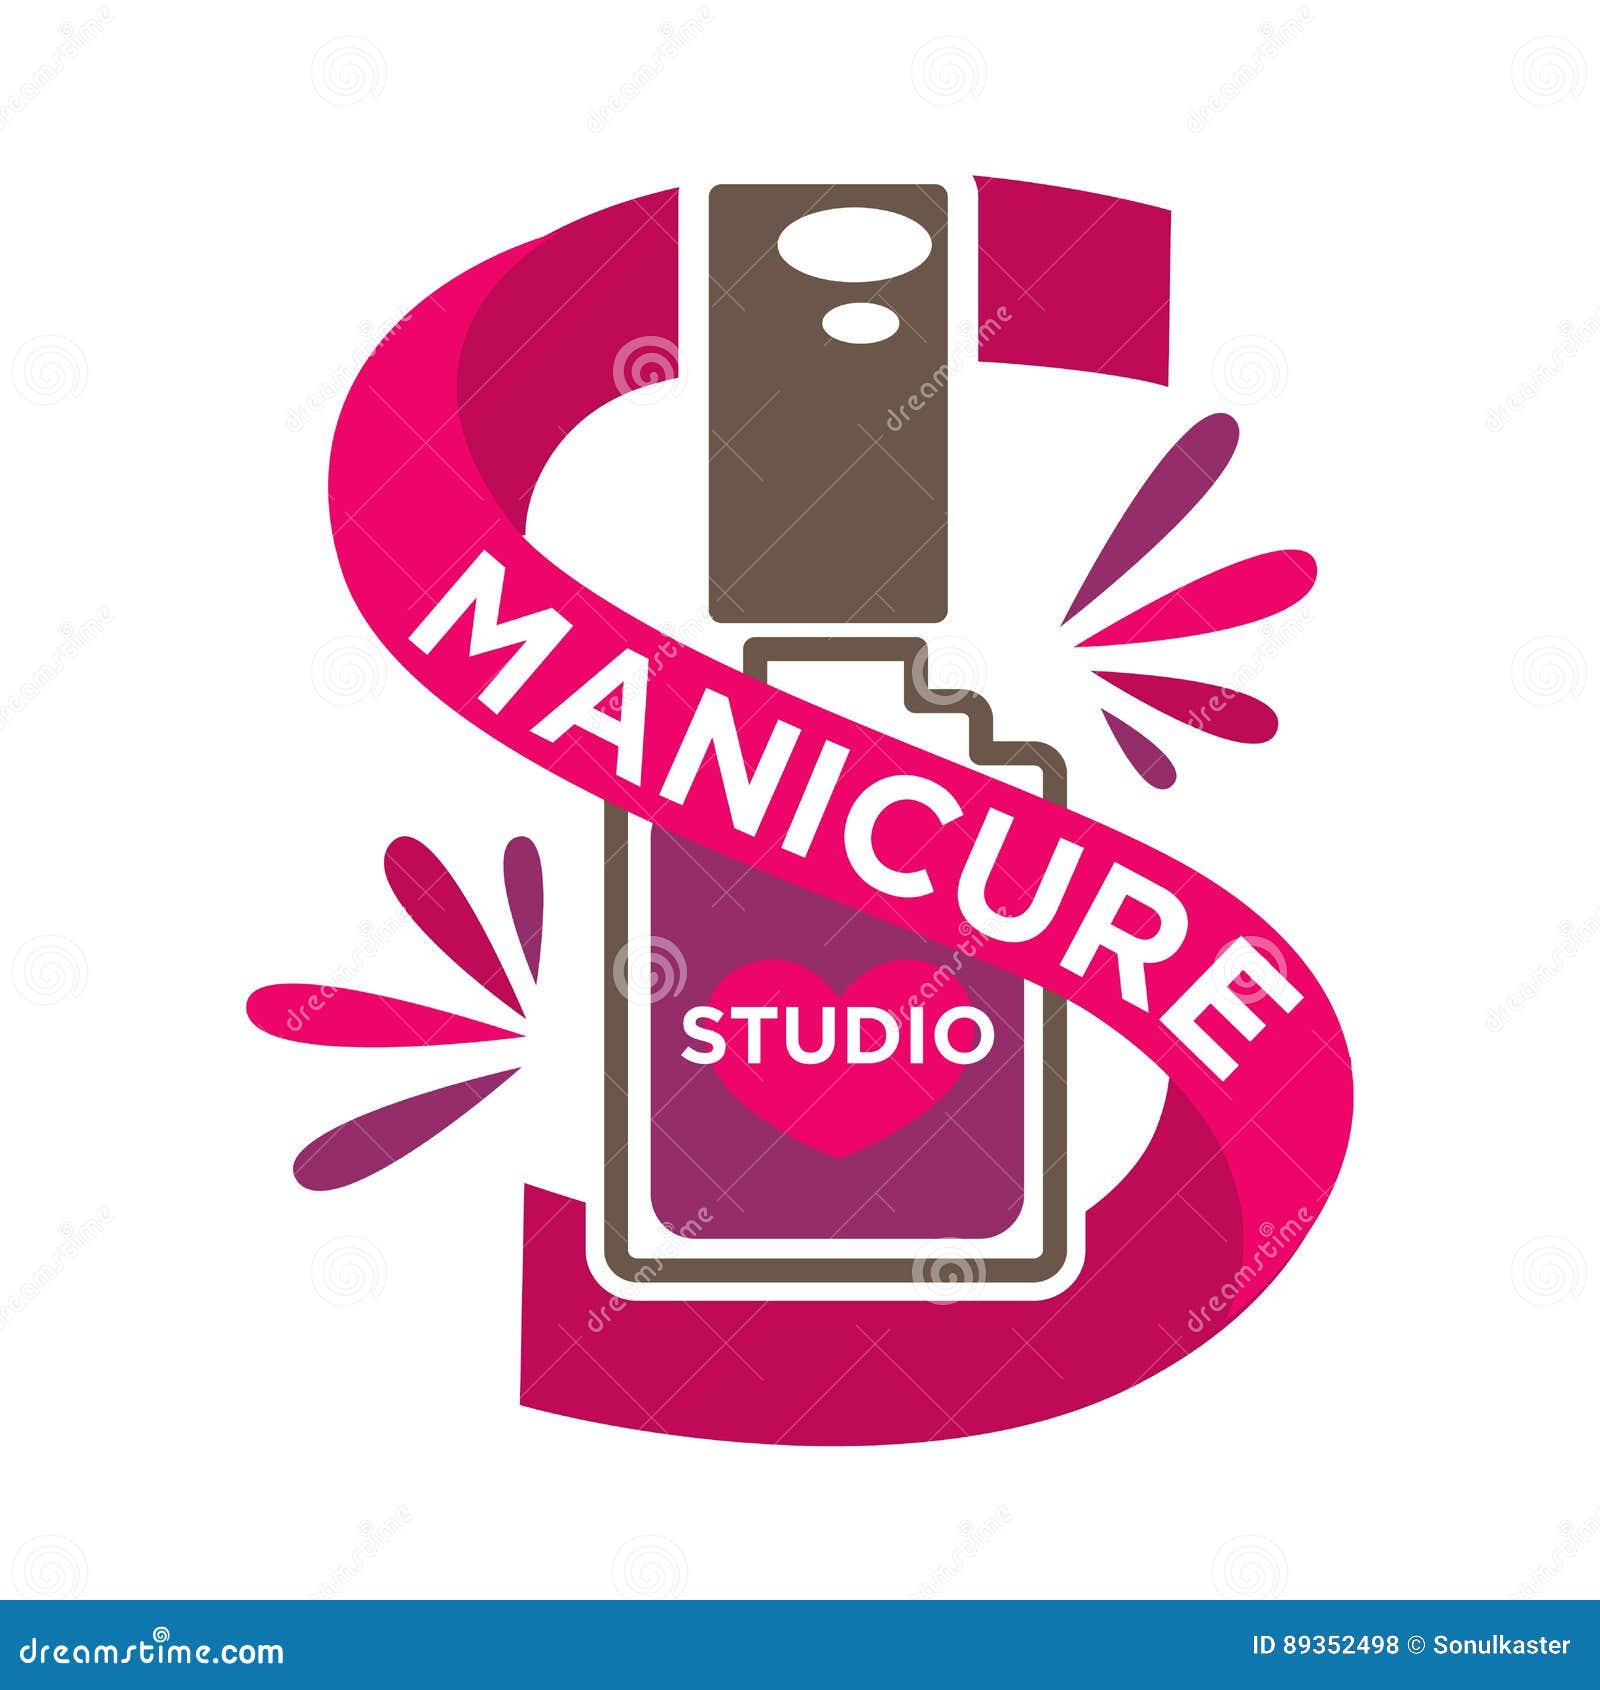 bright manicure studio label with purple nailvarnish  on white